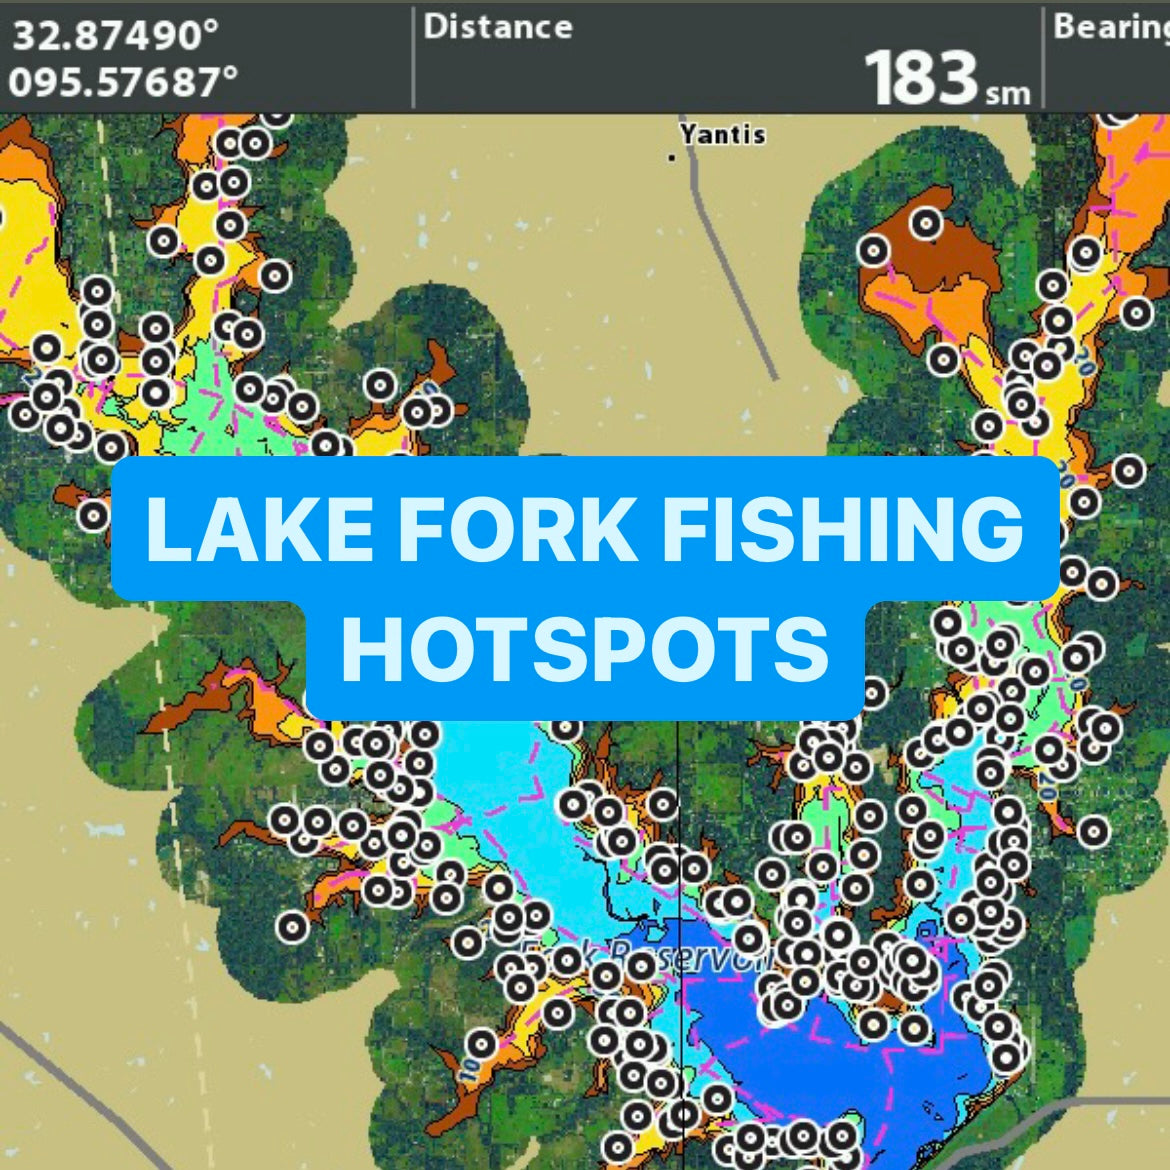 Lake Fork Fishing Hotspots